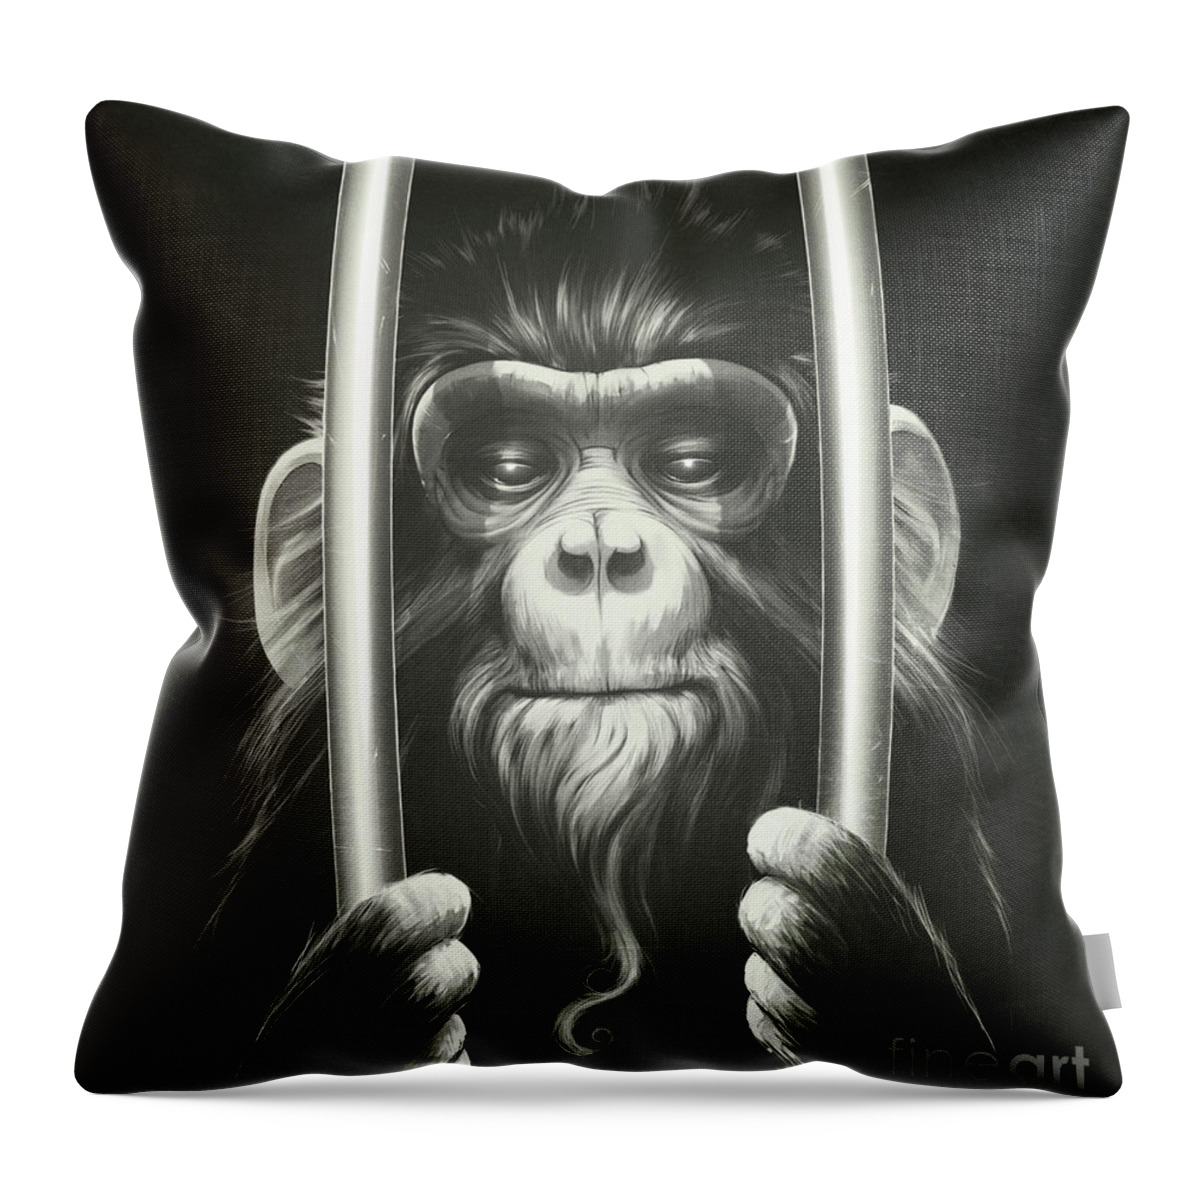 Ape Throw Pillow featuring the digital art Prisoner II by Lukas Brezak